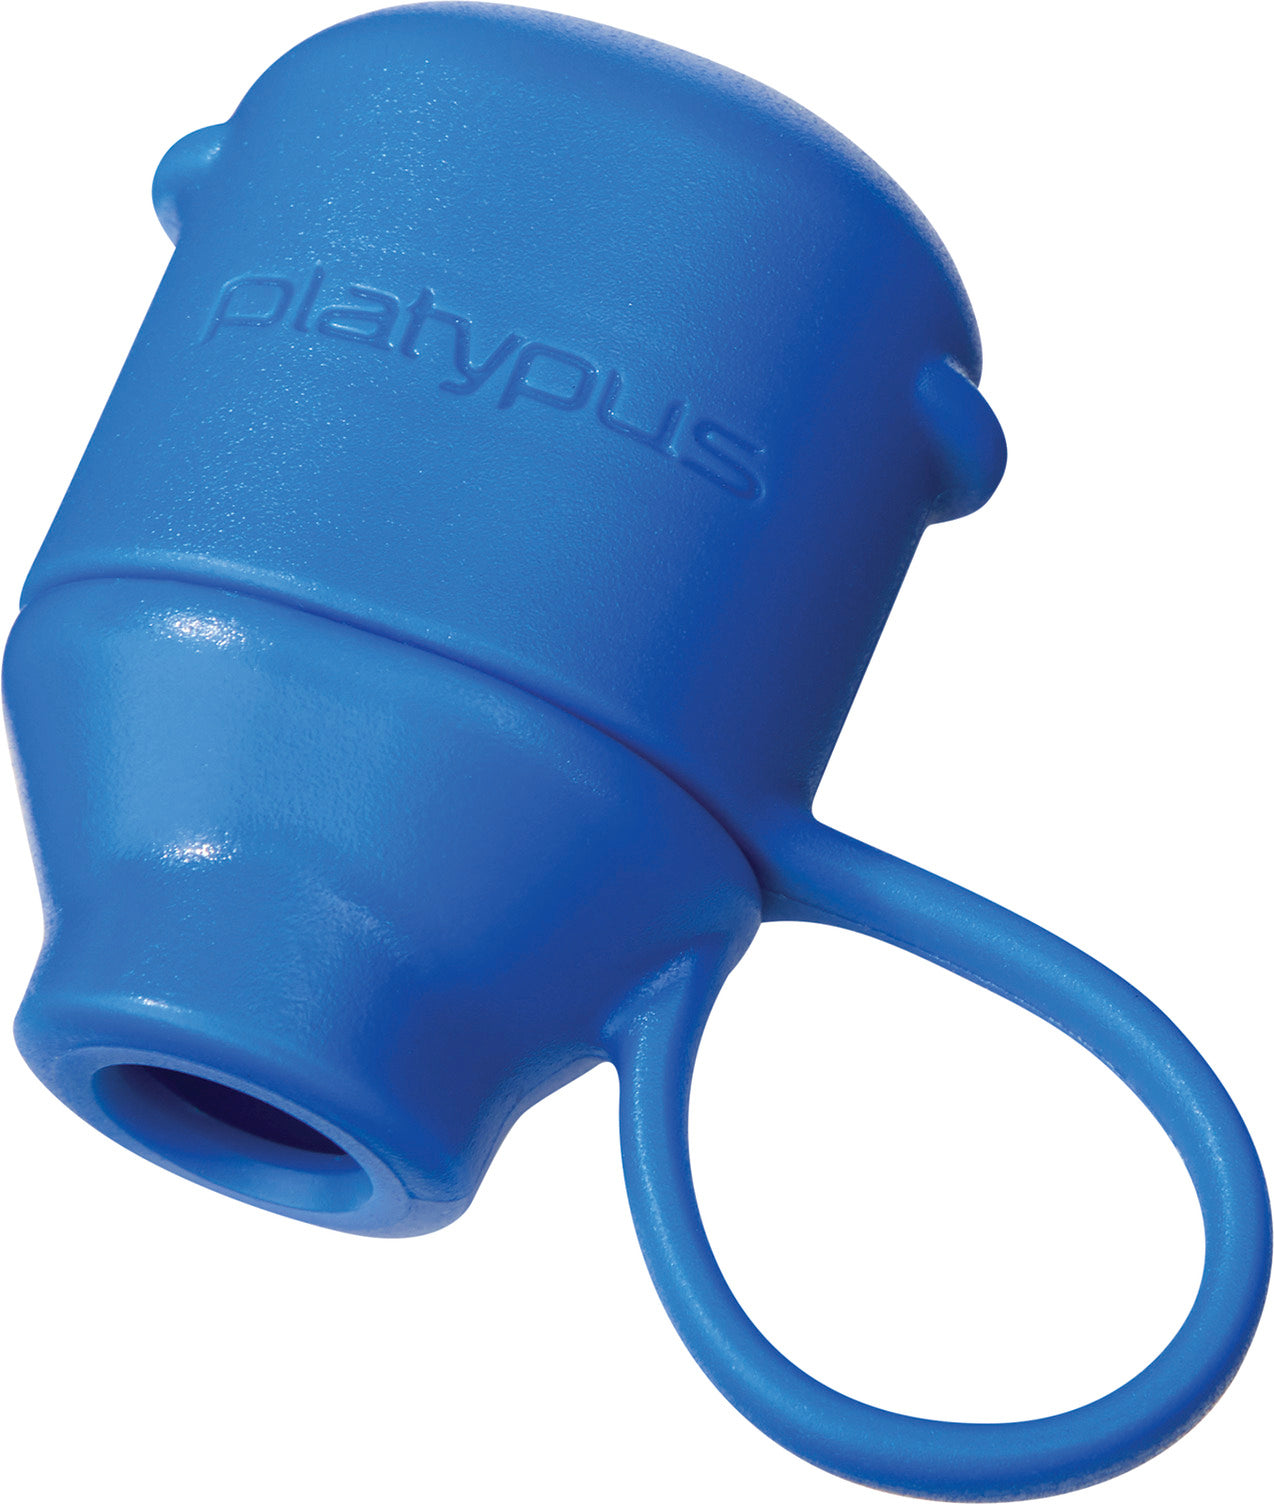 platypus bite valve cover